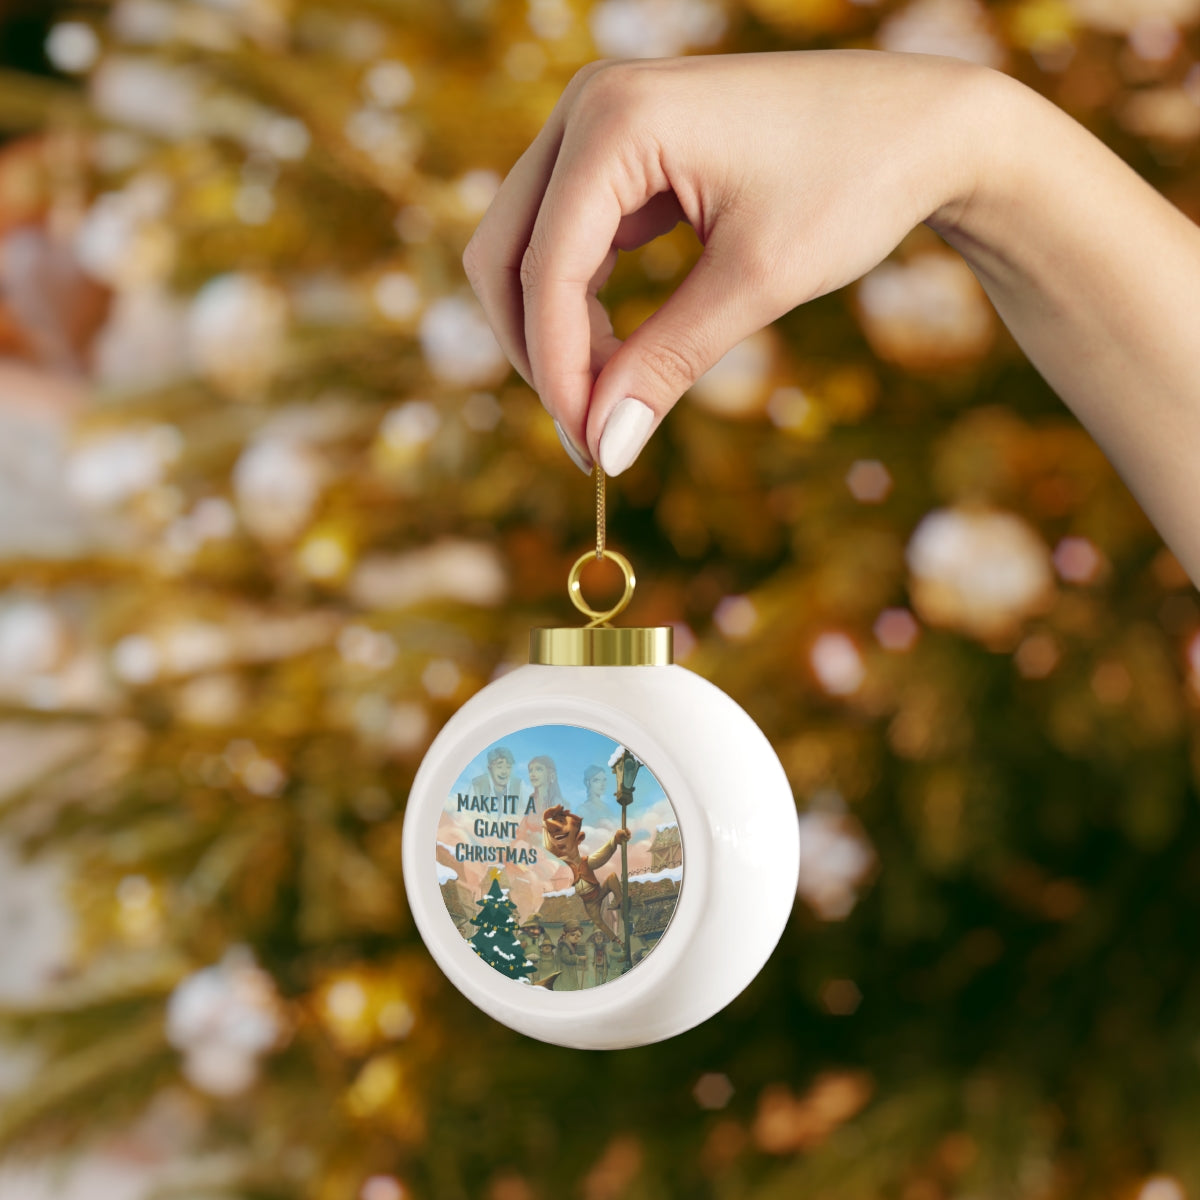 Make It A Giant Christmas Ball Ornament